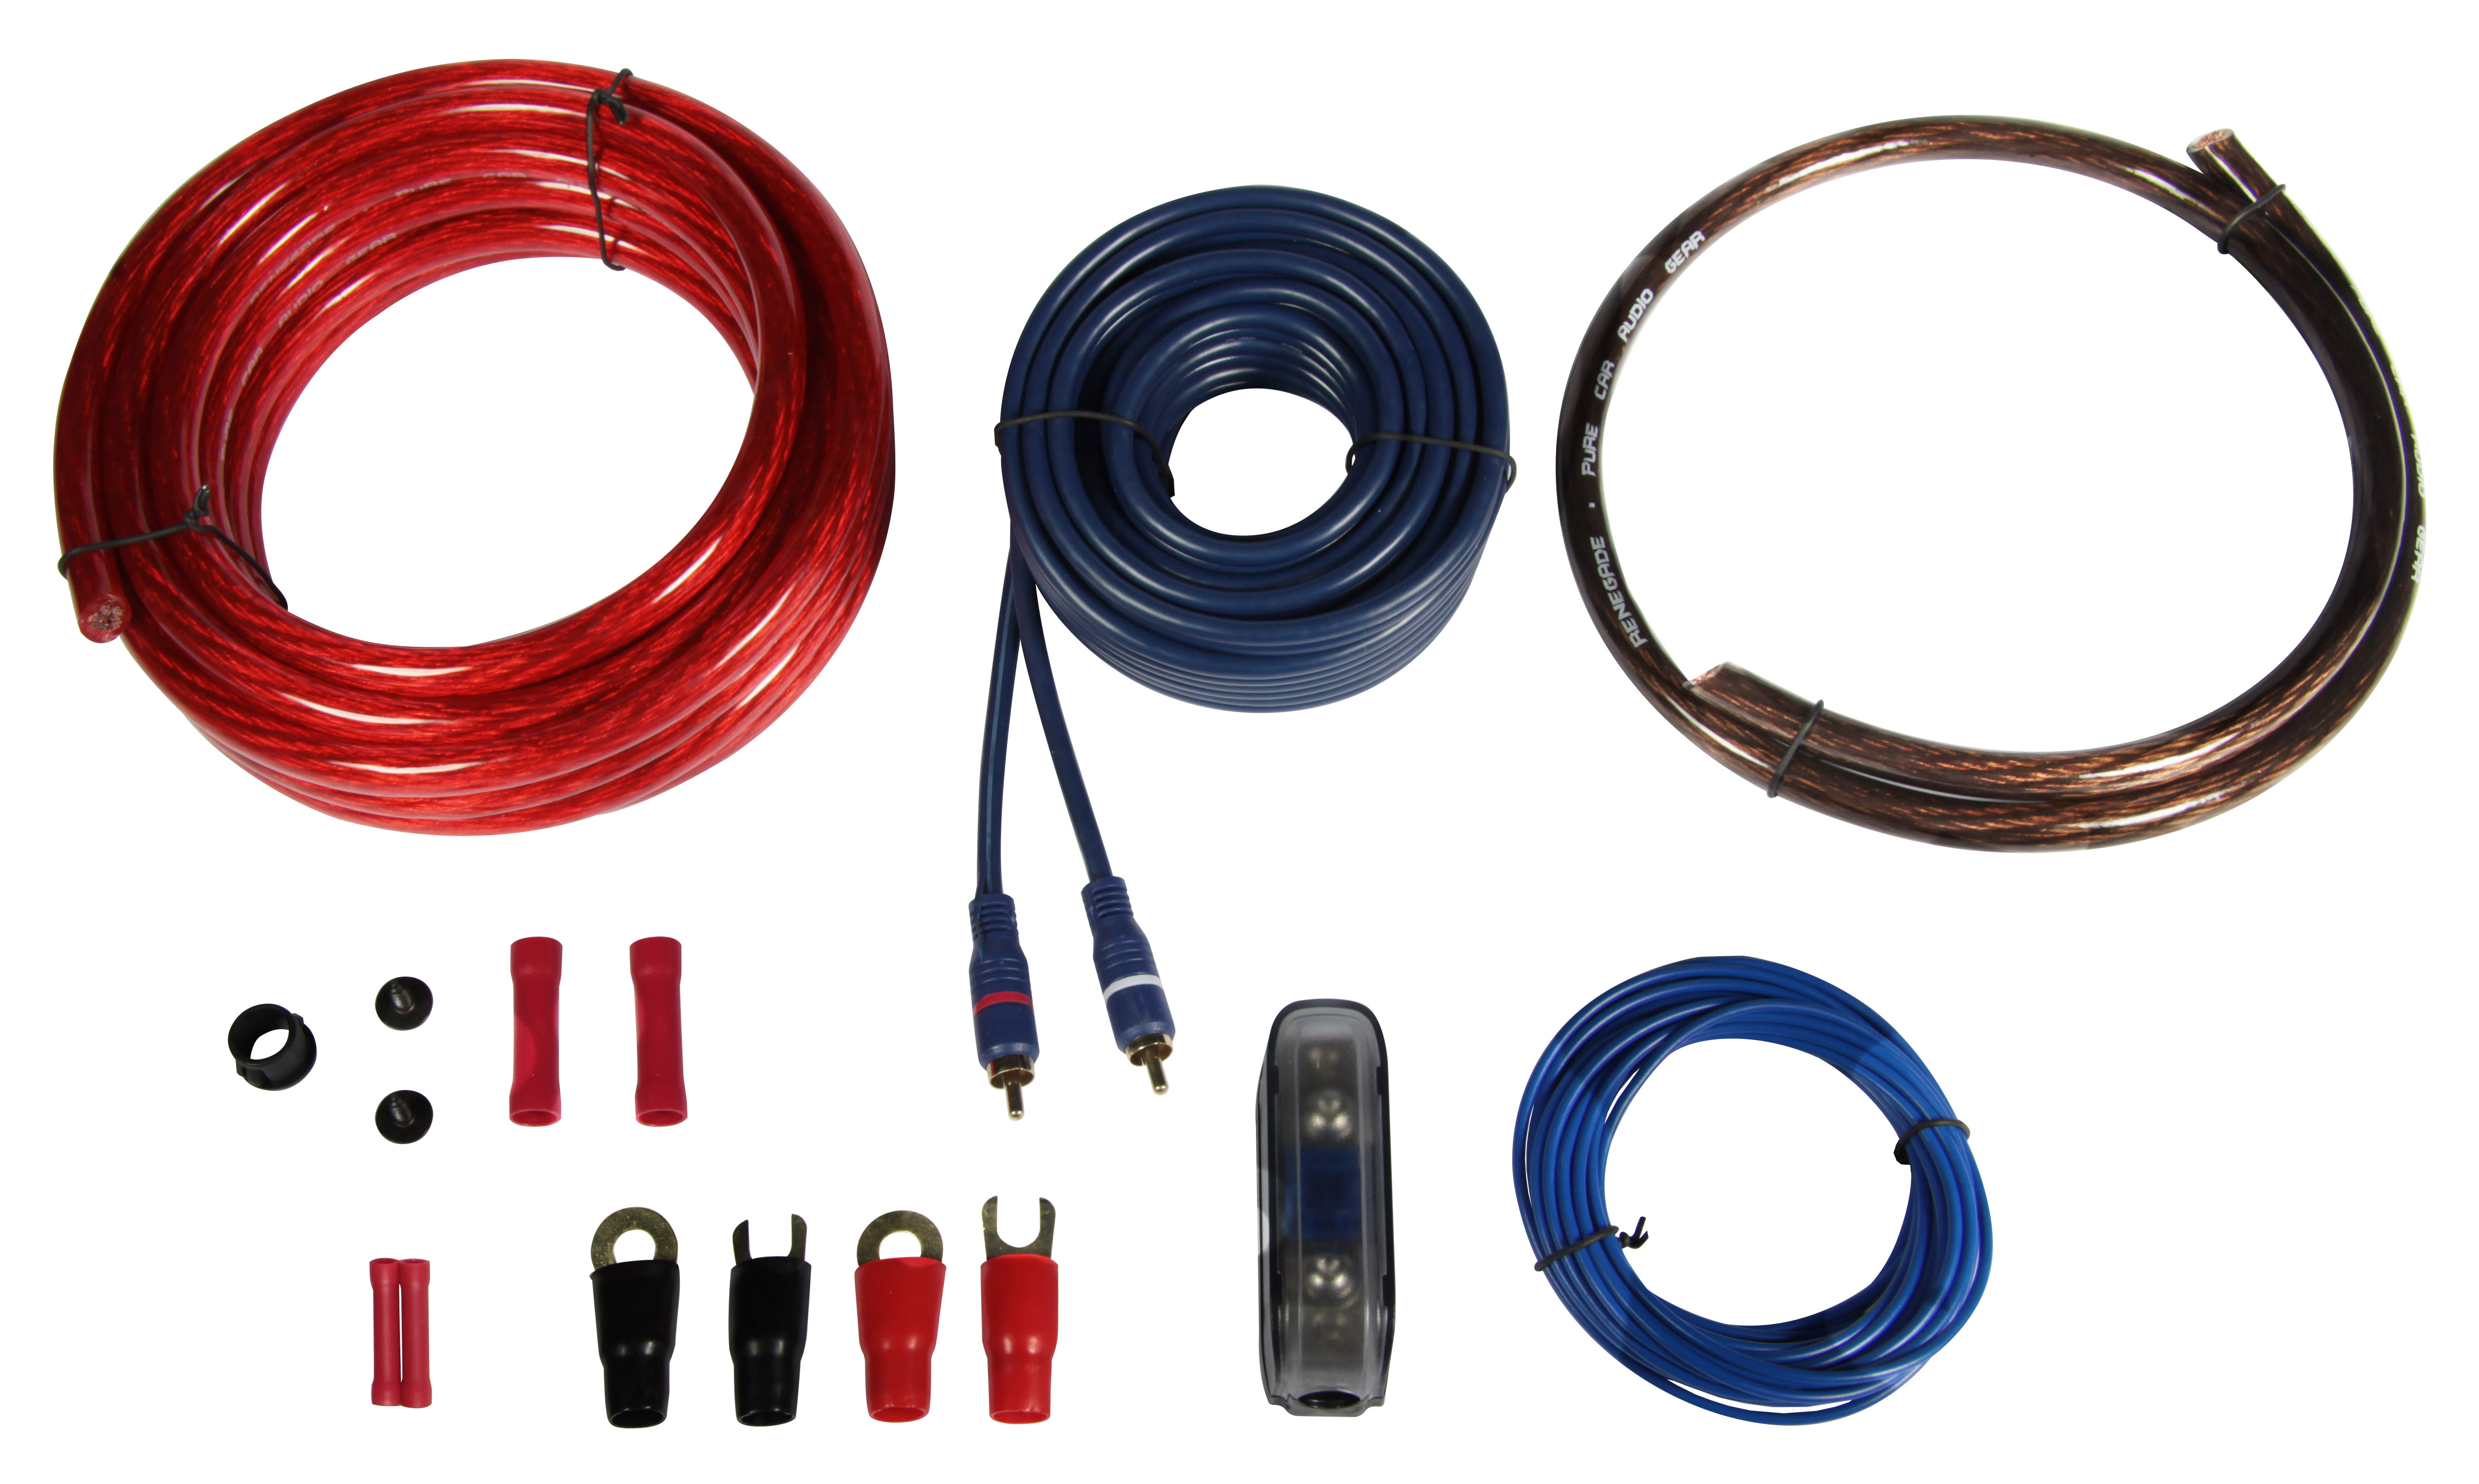 ACV Kabelset 20mm² Kabel SET für Verstärker Einbau